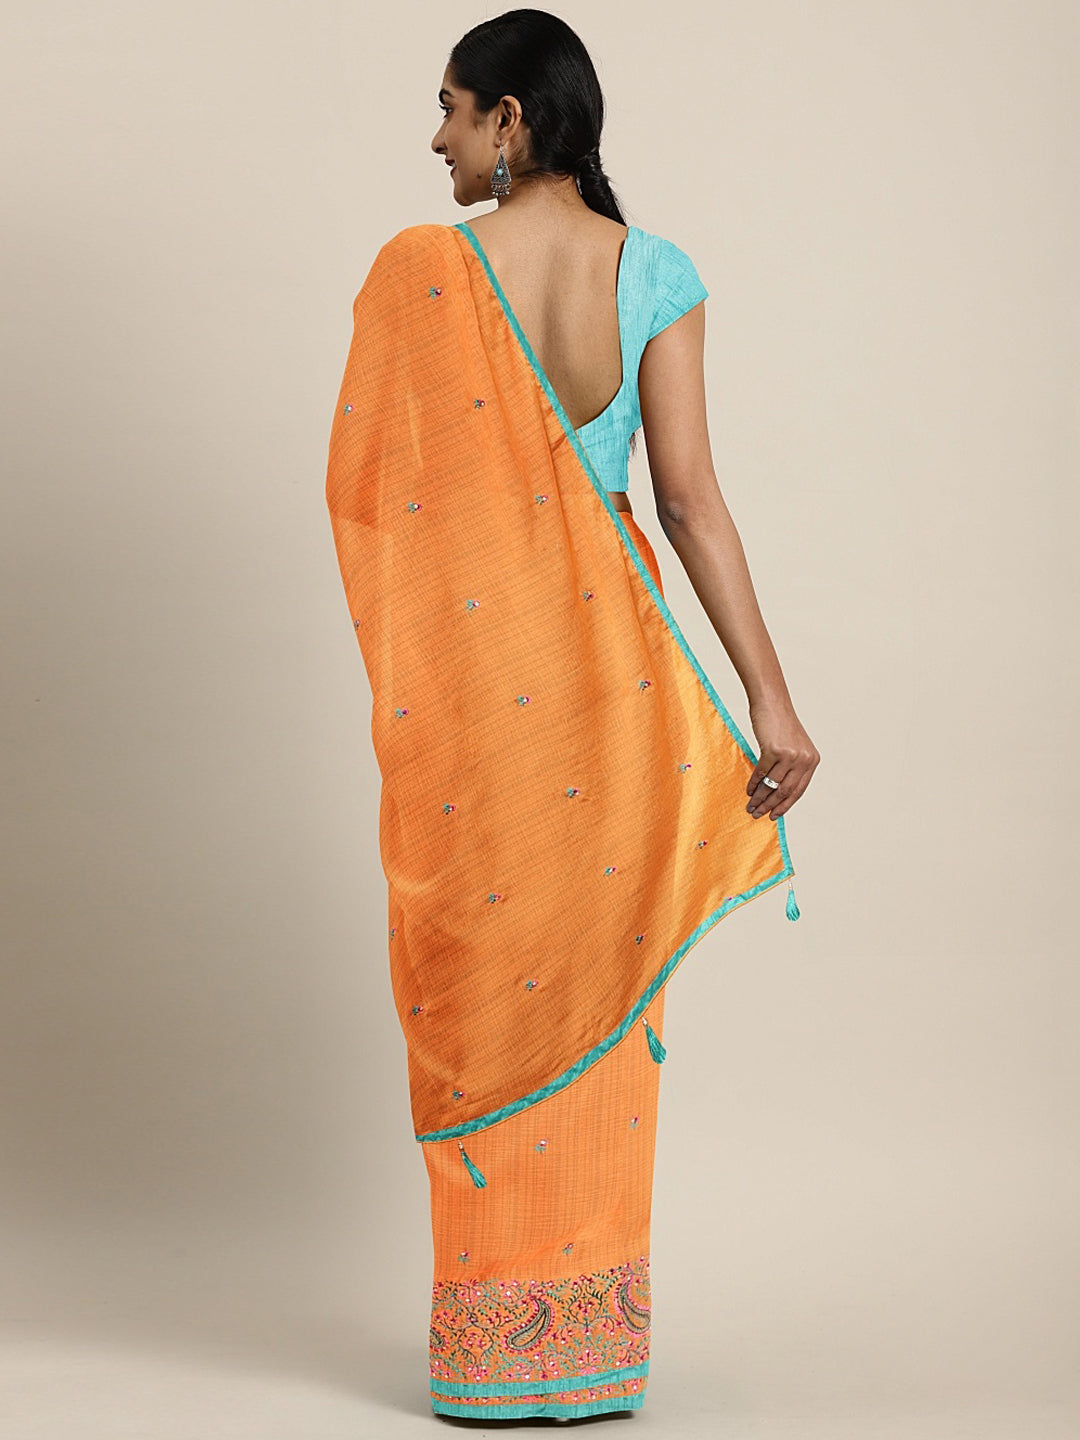 Neeru's Orange Embroidered Saree With Blouse